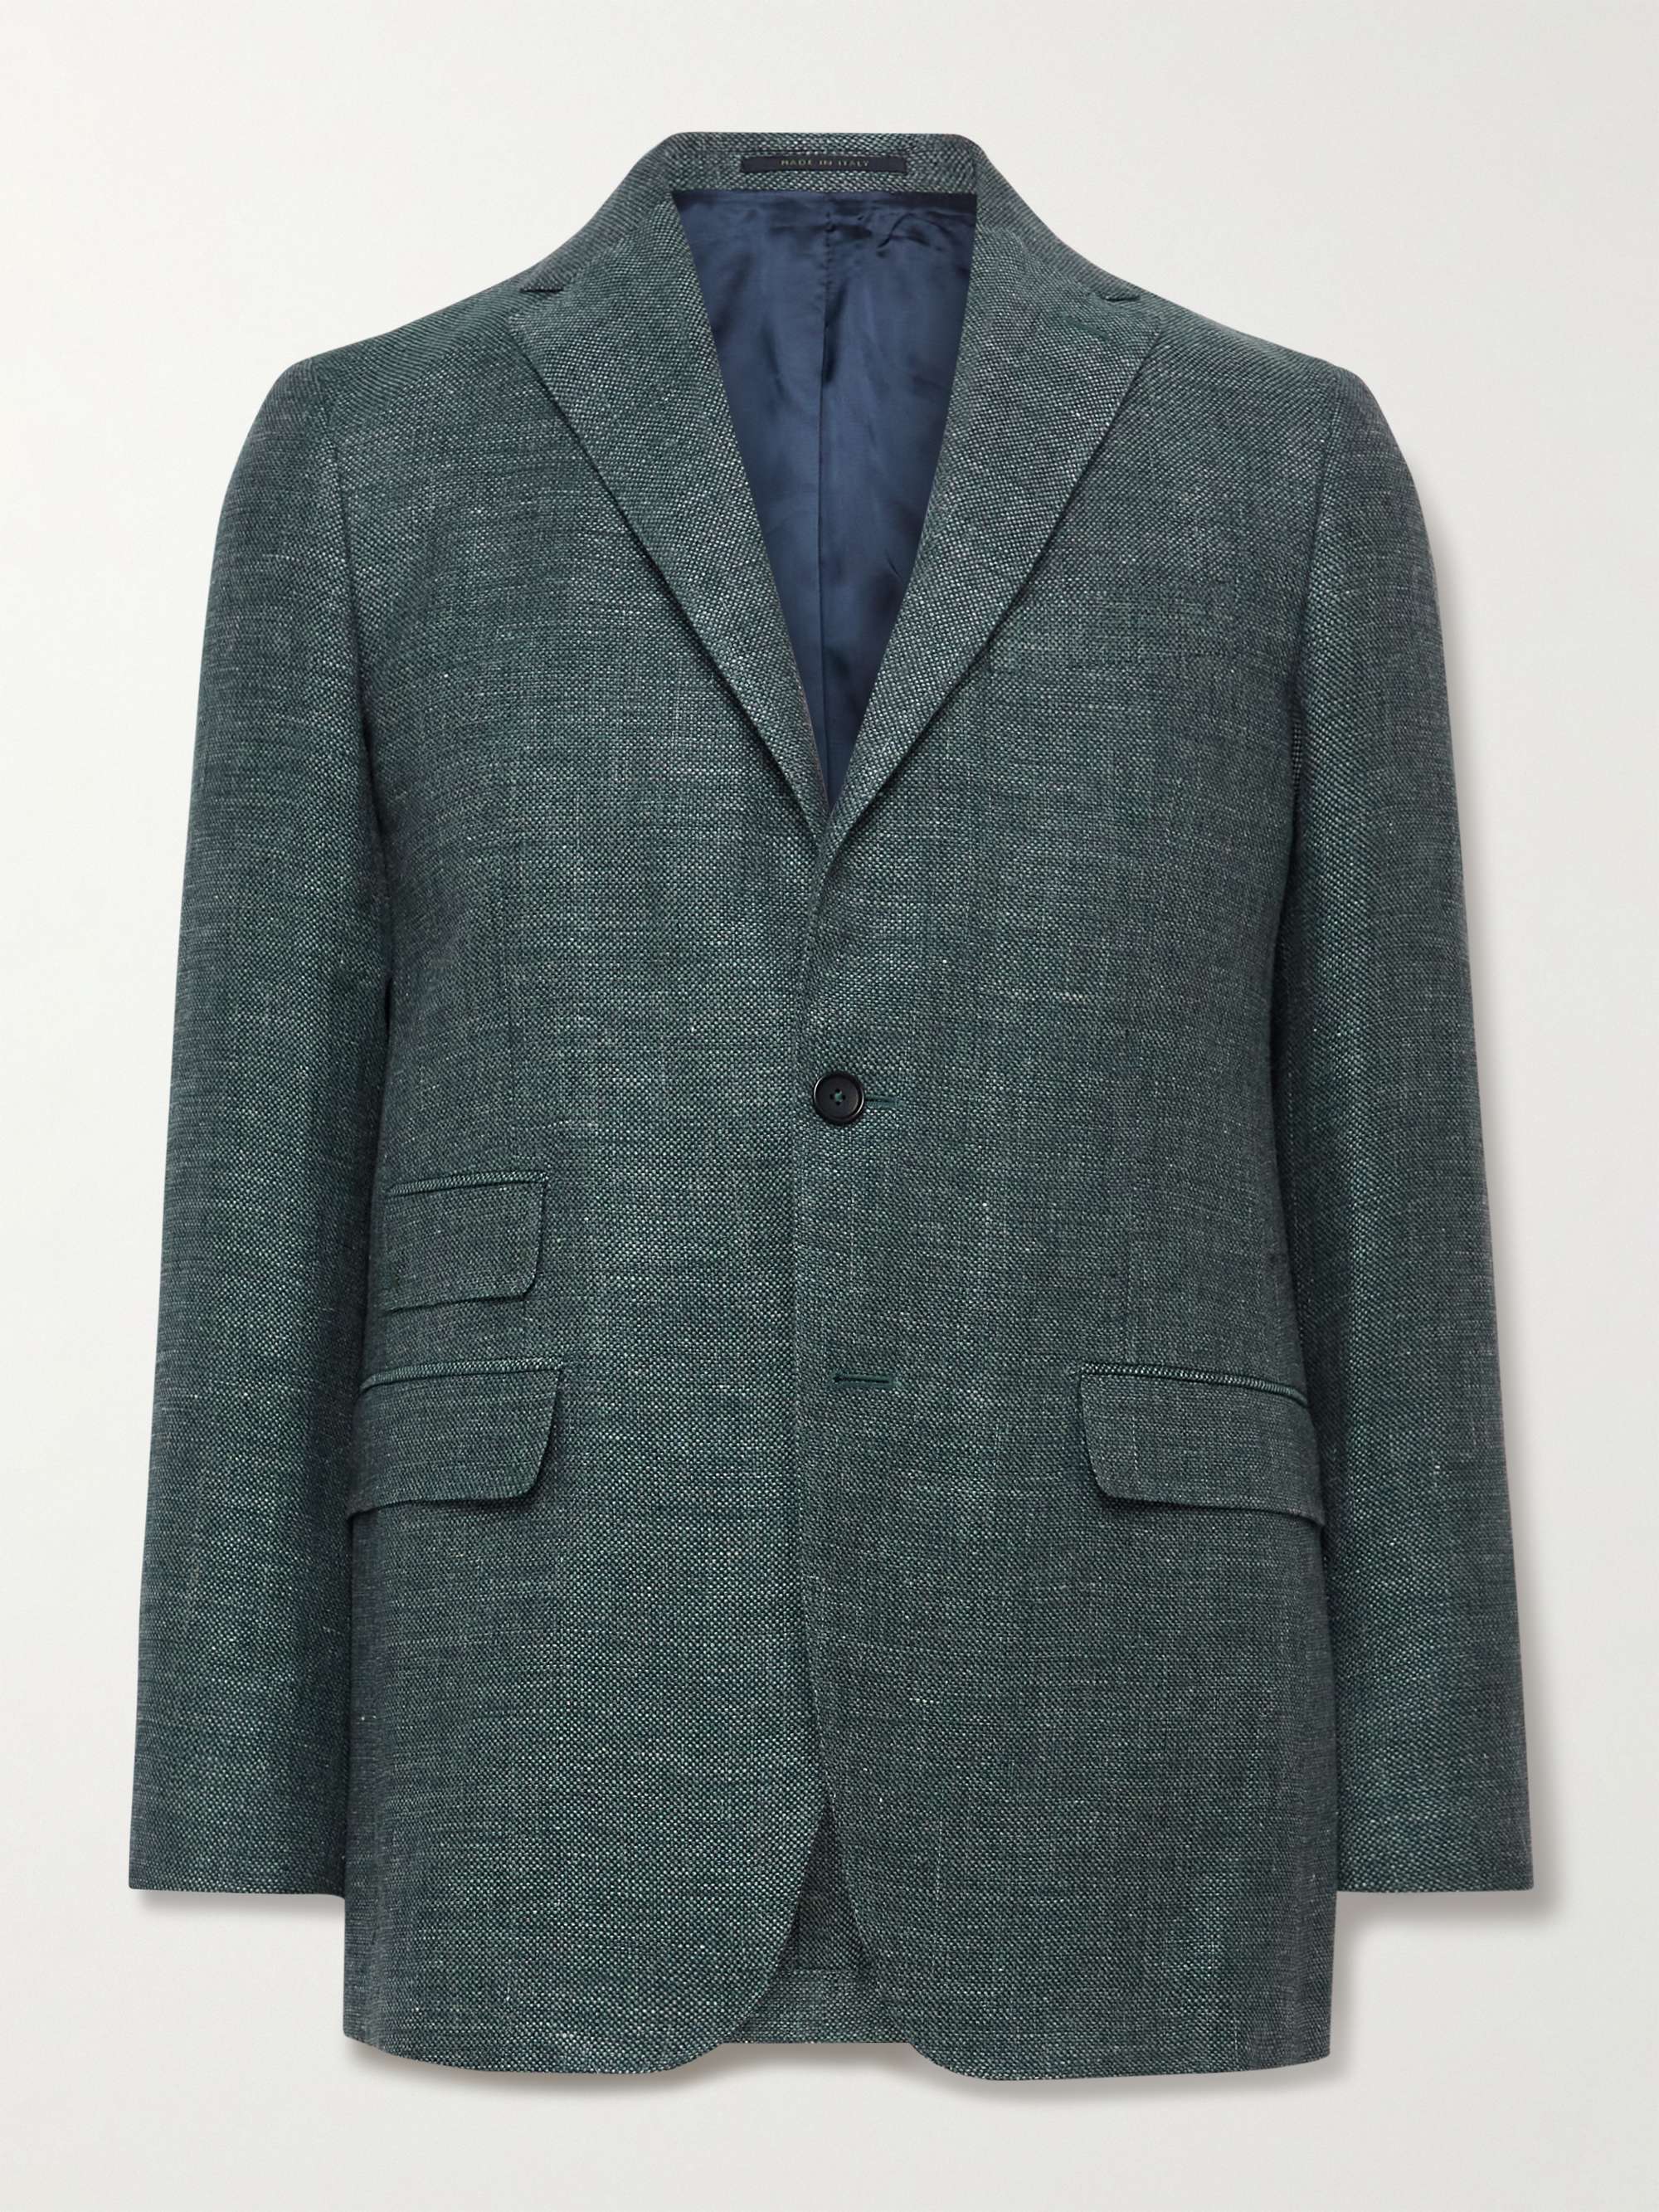 SID MASHBURN Kincaid No. 2 Slim-Fit Linen and Wool-Blend Hopsack Suit ...